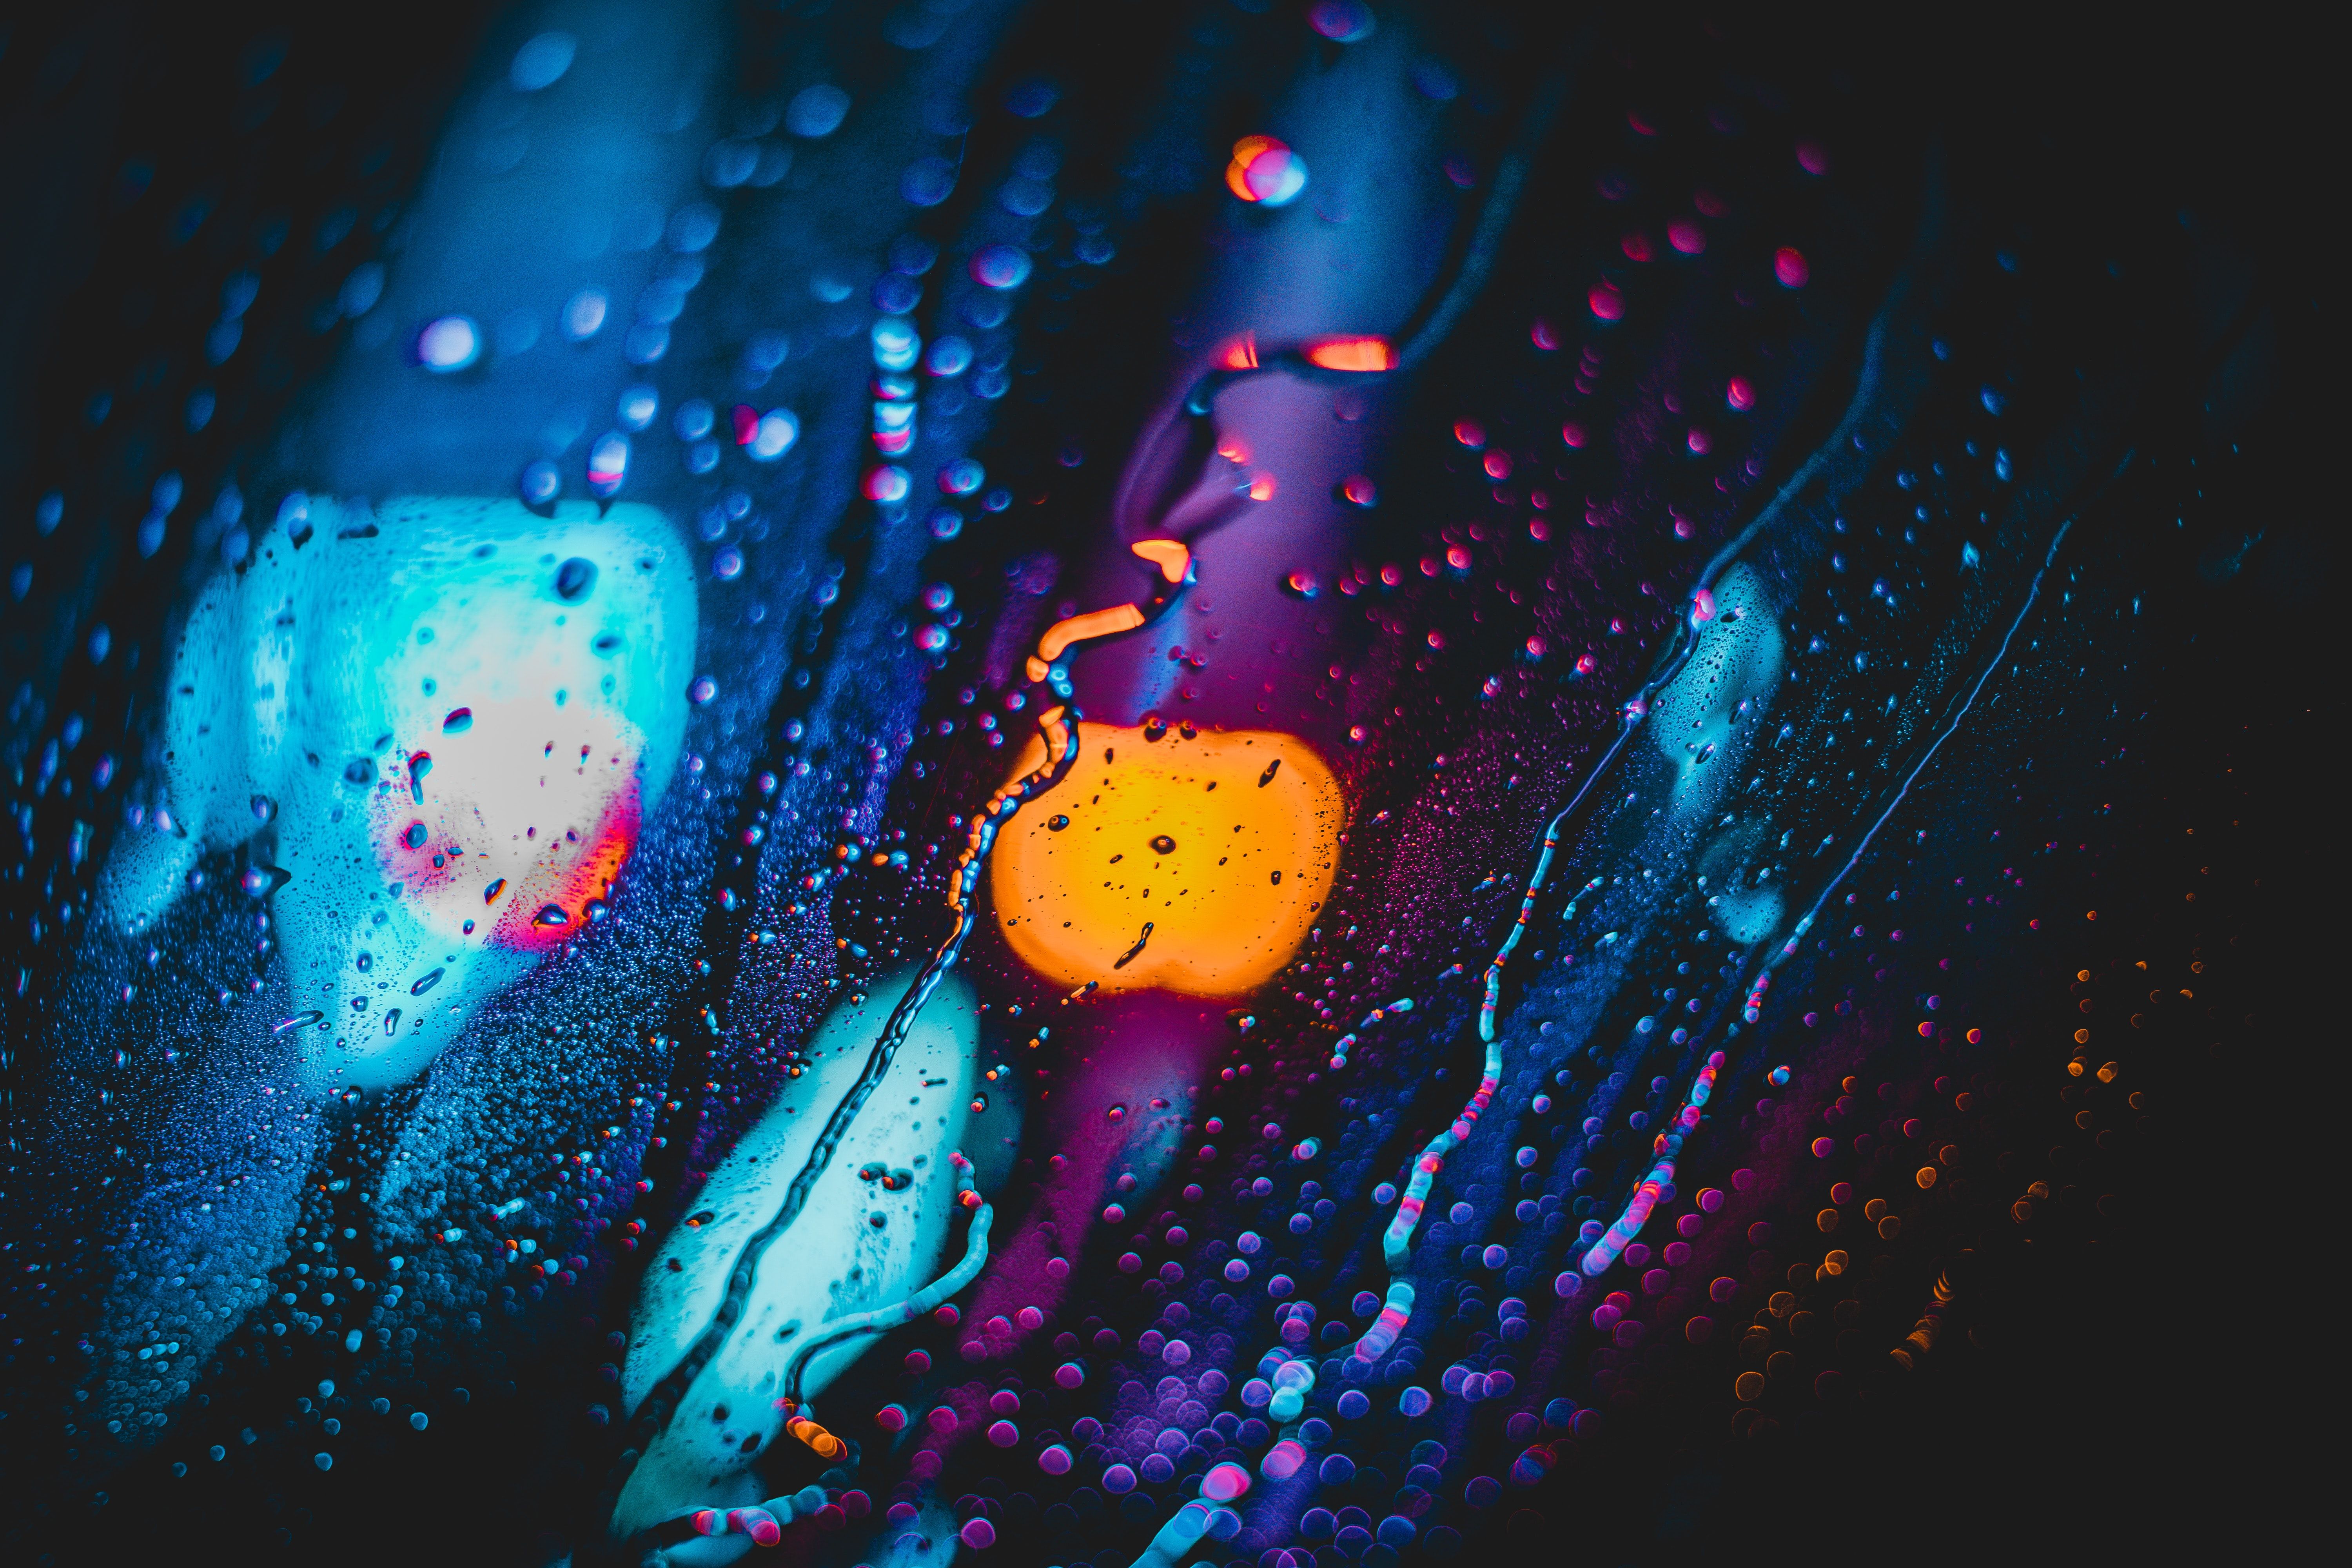 Rain 4K Wallpaper, Lights, Bokeh, Blur, Glass, Water drops, 5K, Photography